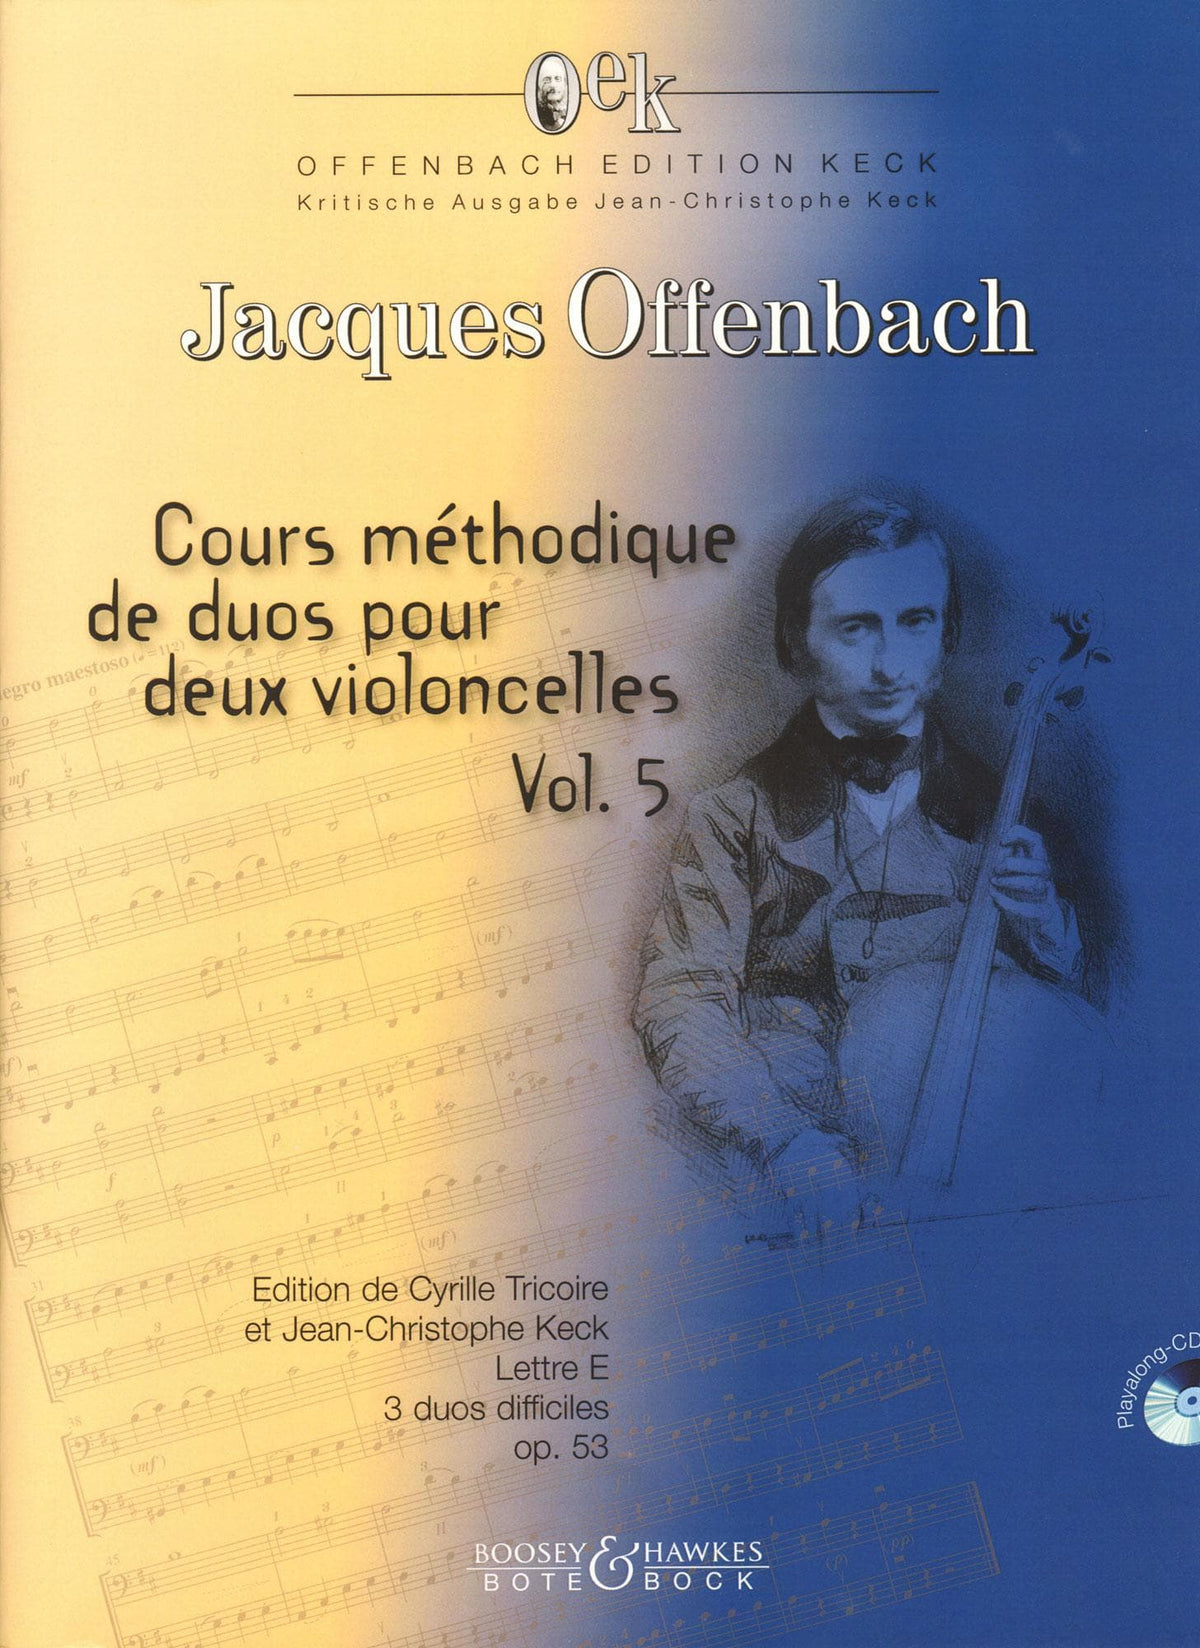 Offenbach, Jacques - Cours methodique de duos pour deux violoncelles, Vol. 5 - for Two Cellos, or Cello and CD - Edition Keck - Boosey & Hawkes